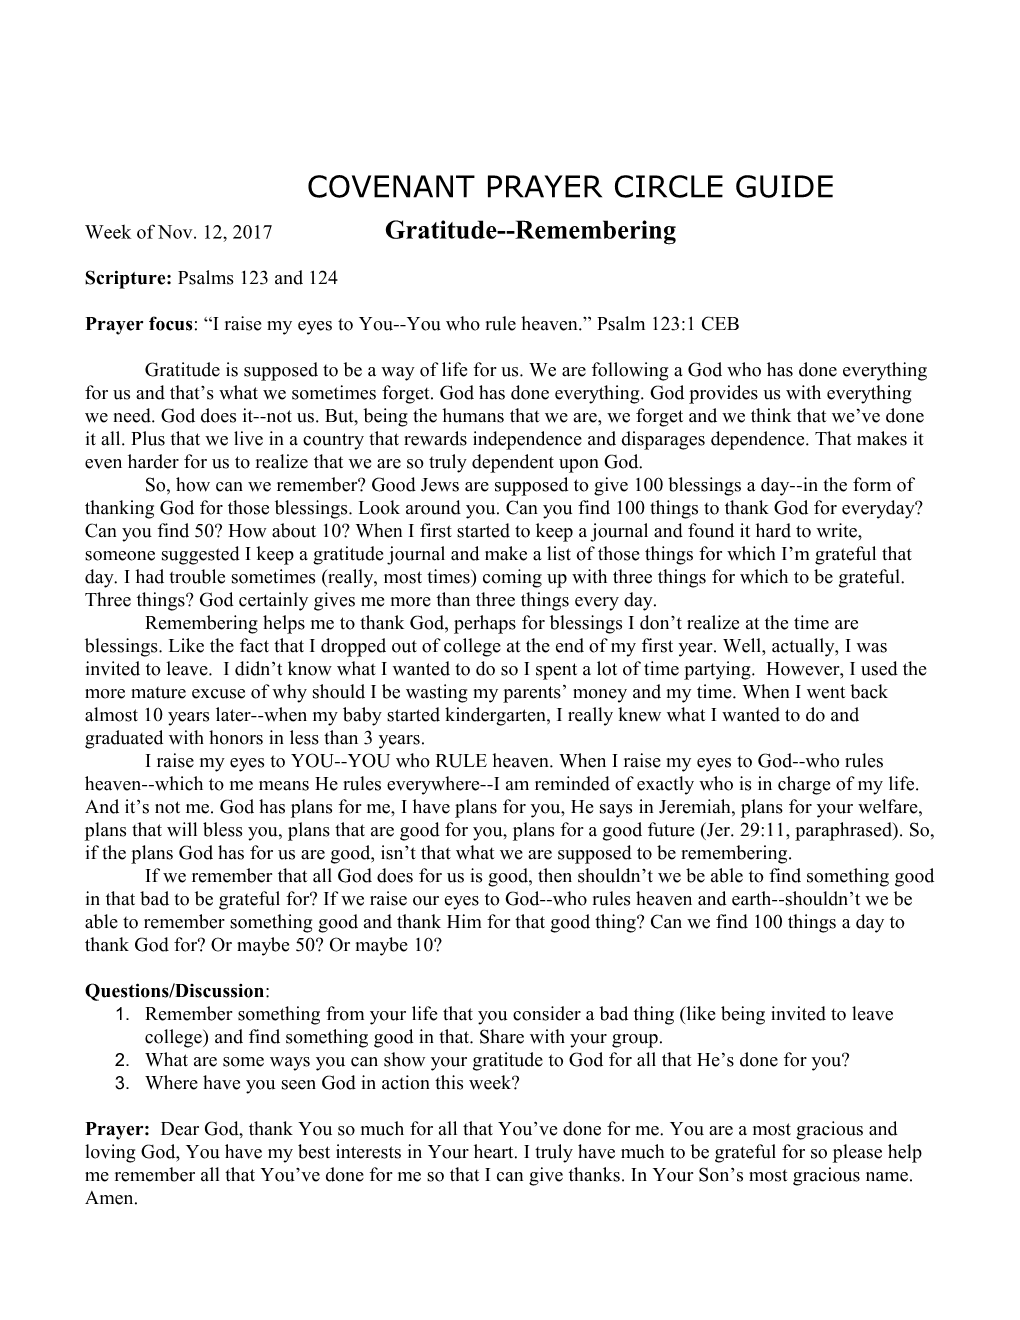 Covenant Prayer Circle Guide